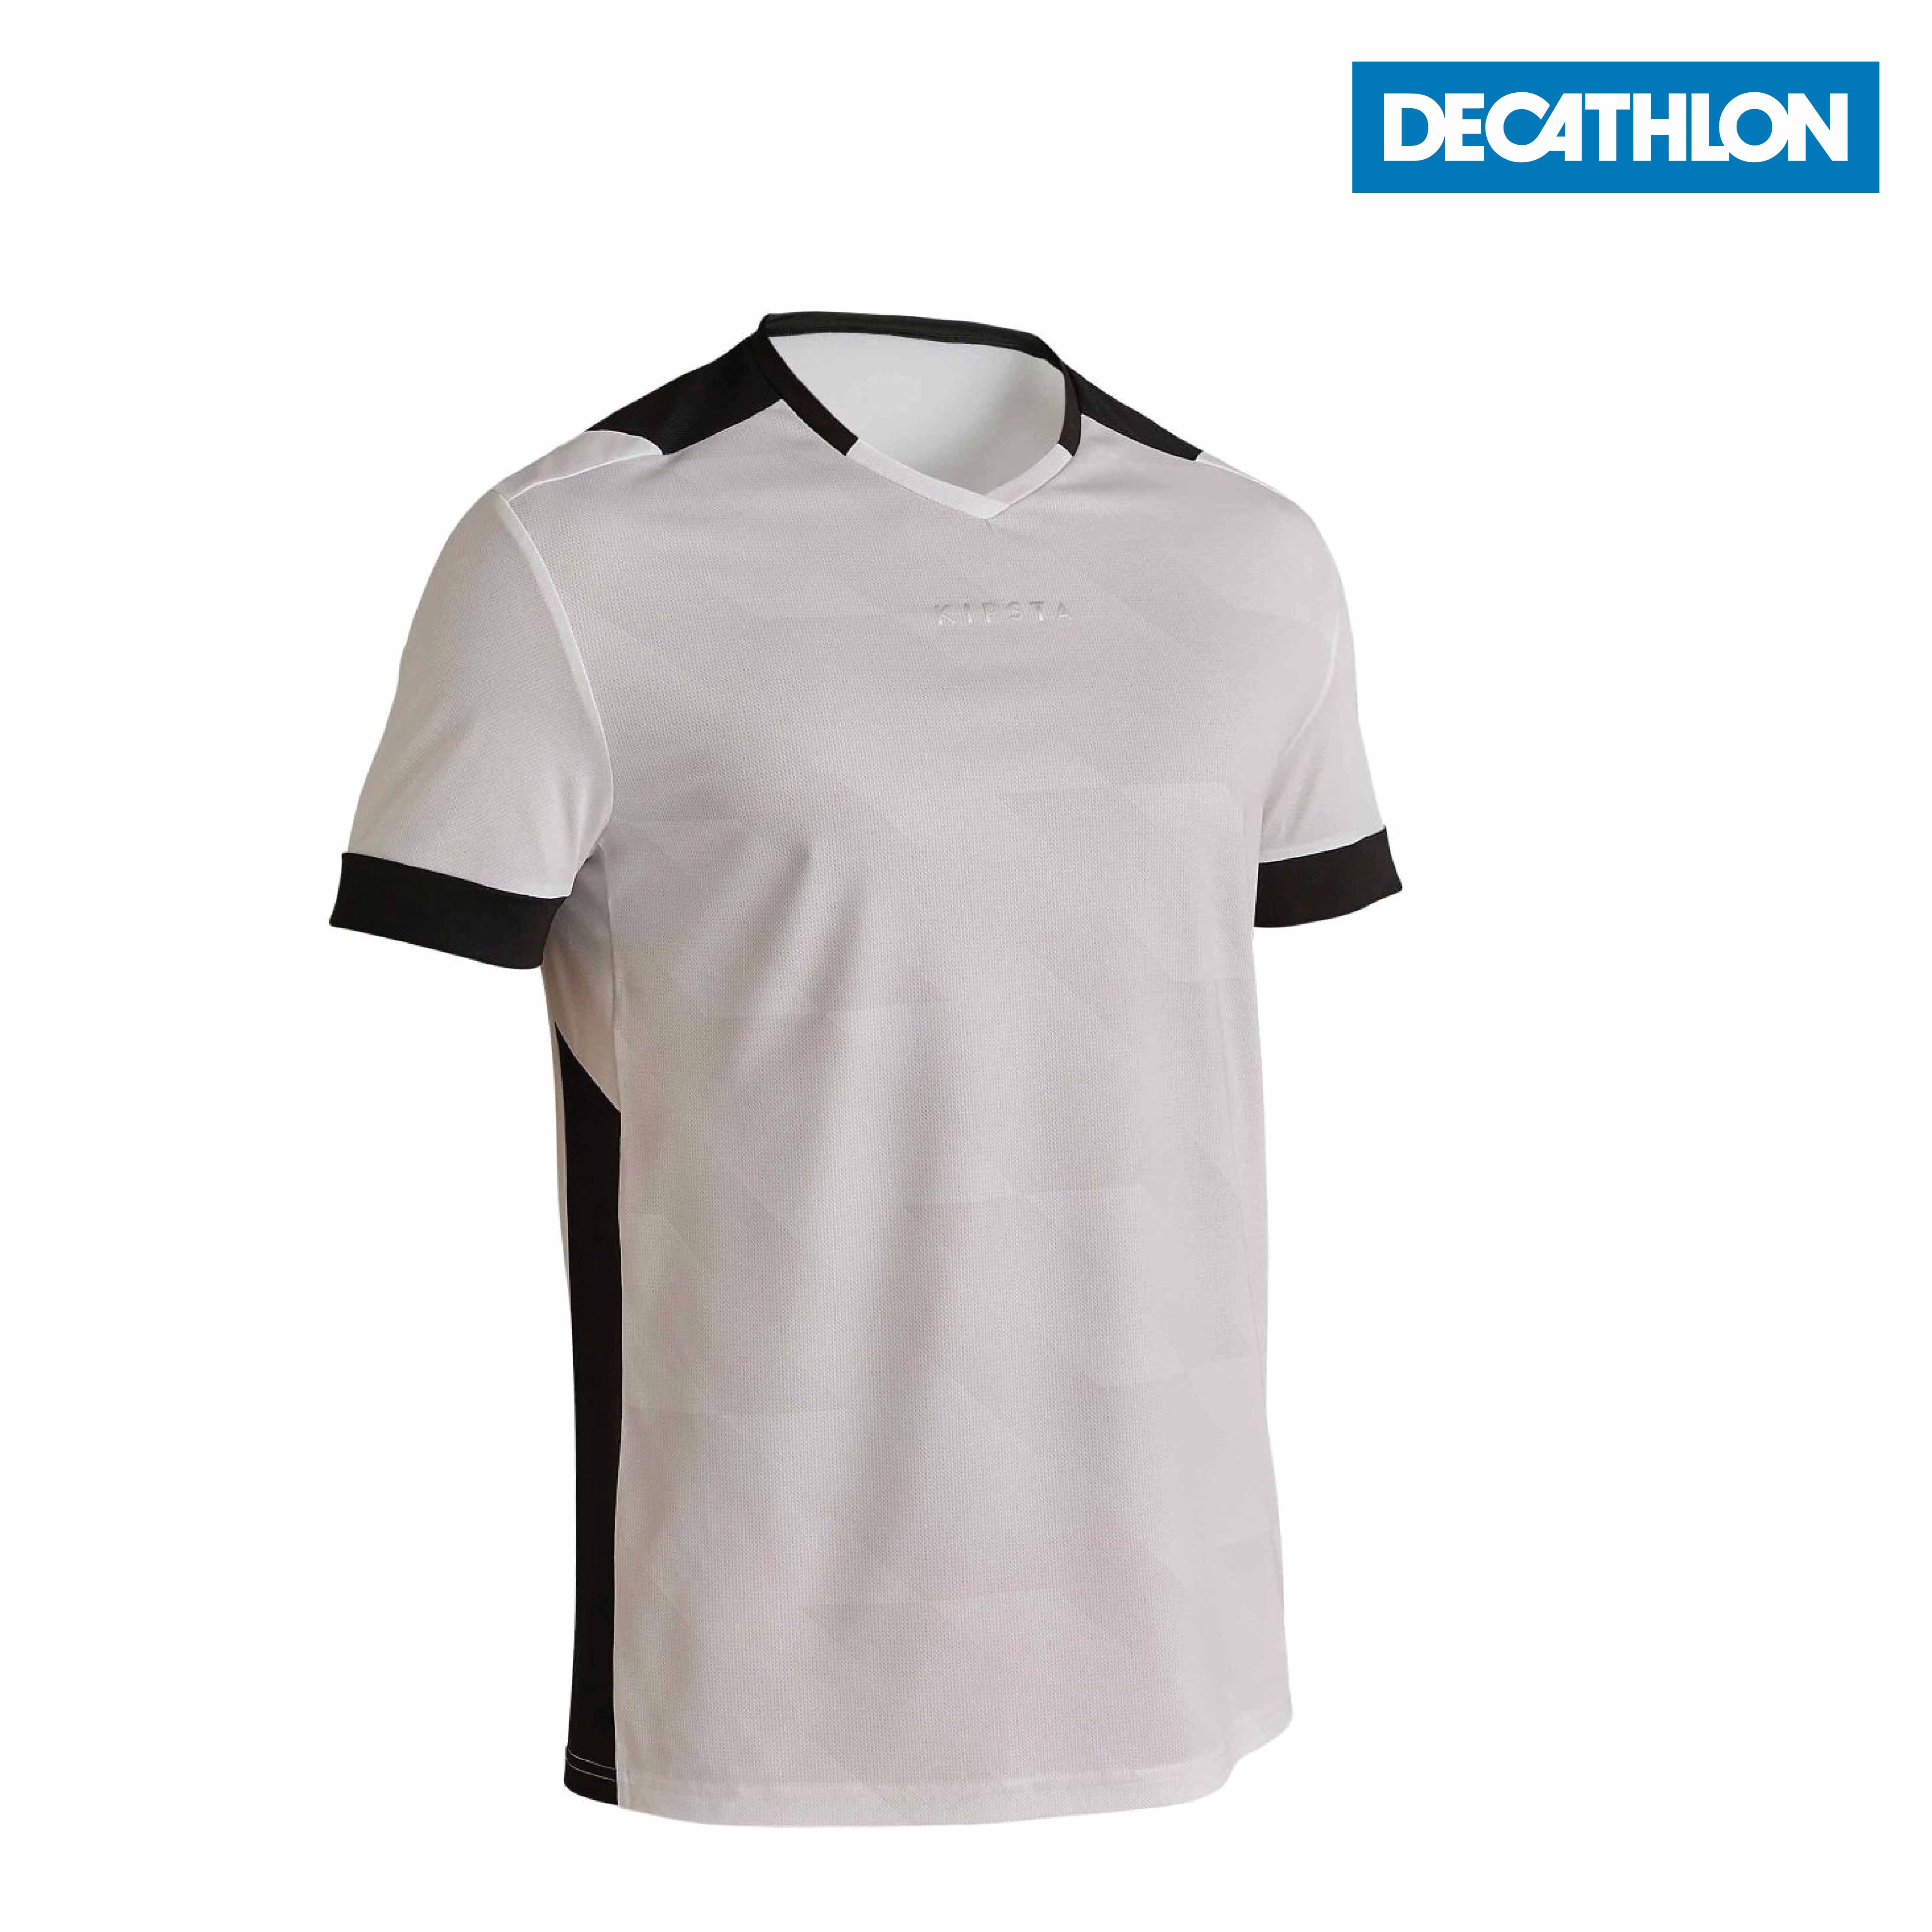 decathlon football jersey